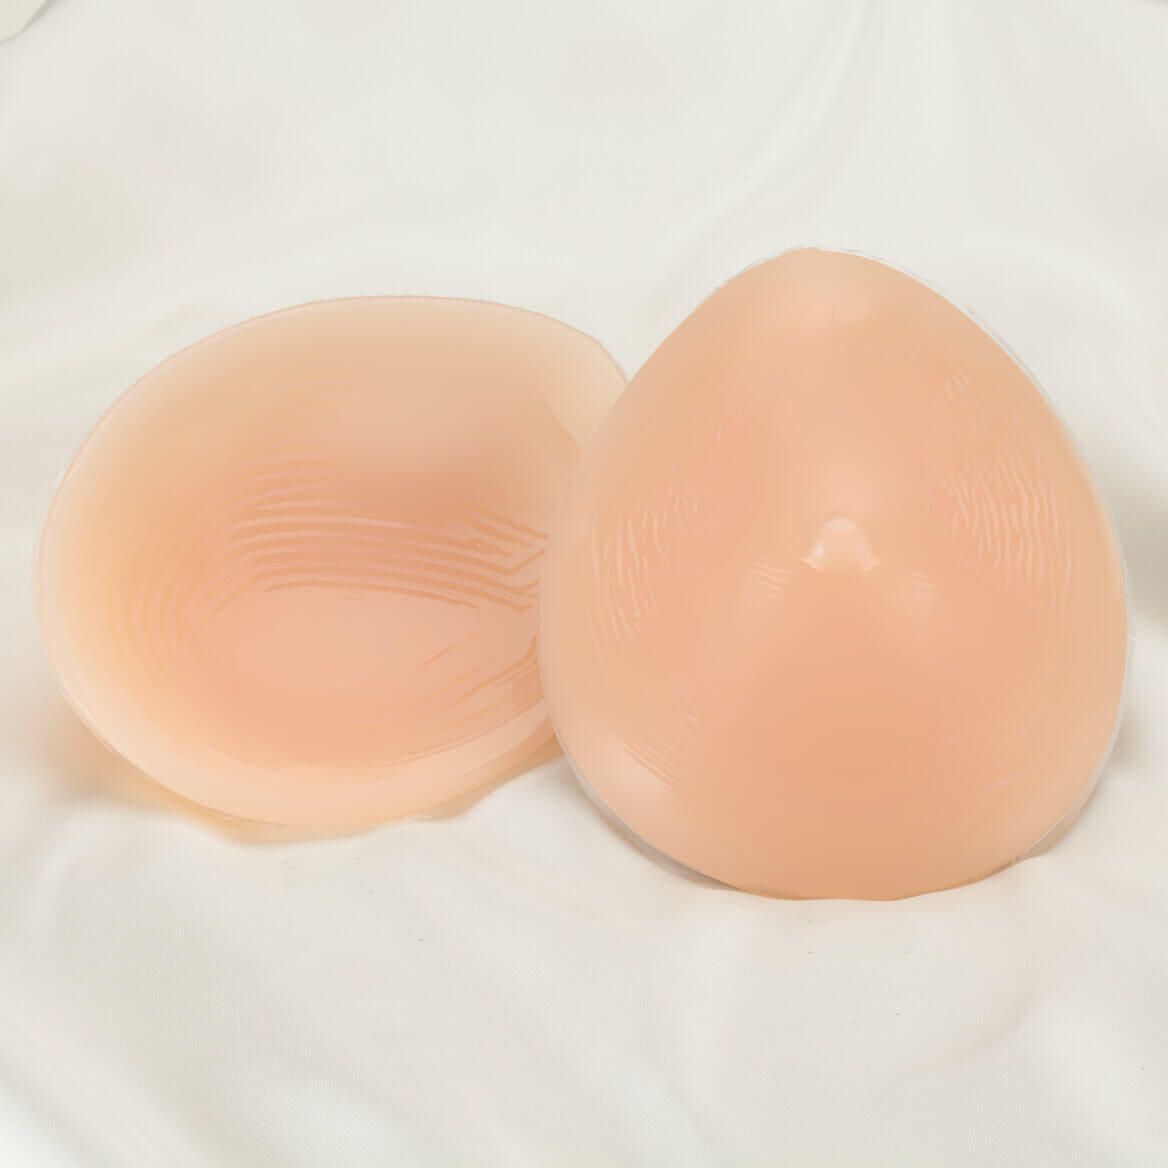 Silicone Teardrop Breast Form, 1 Form + '-' + 360138